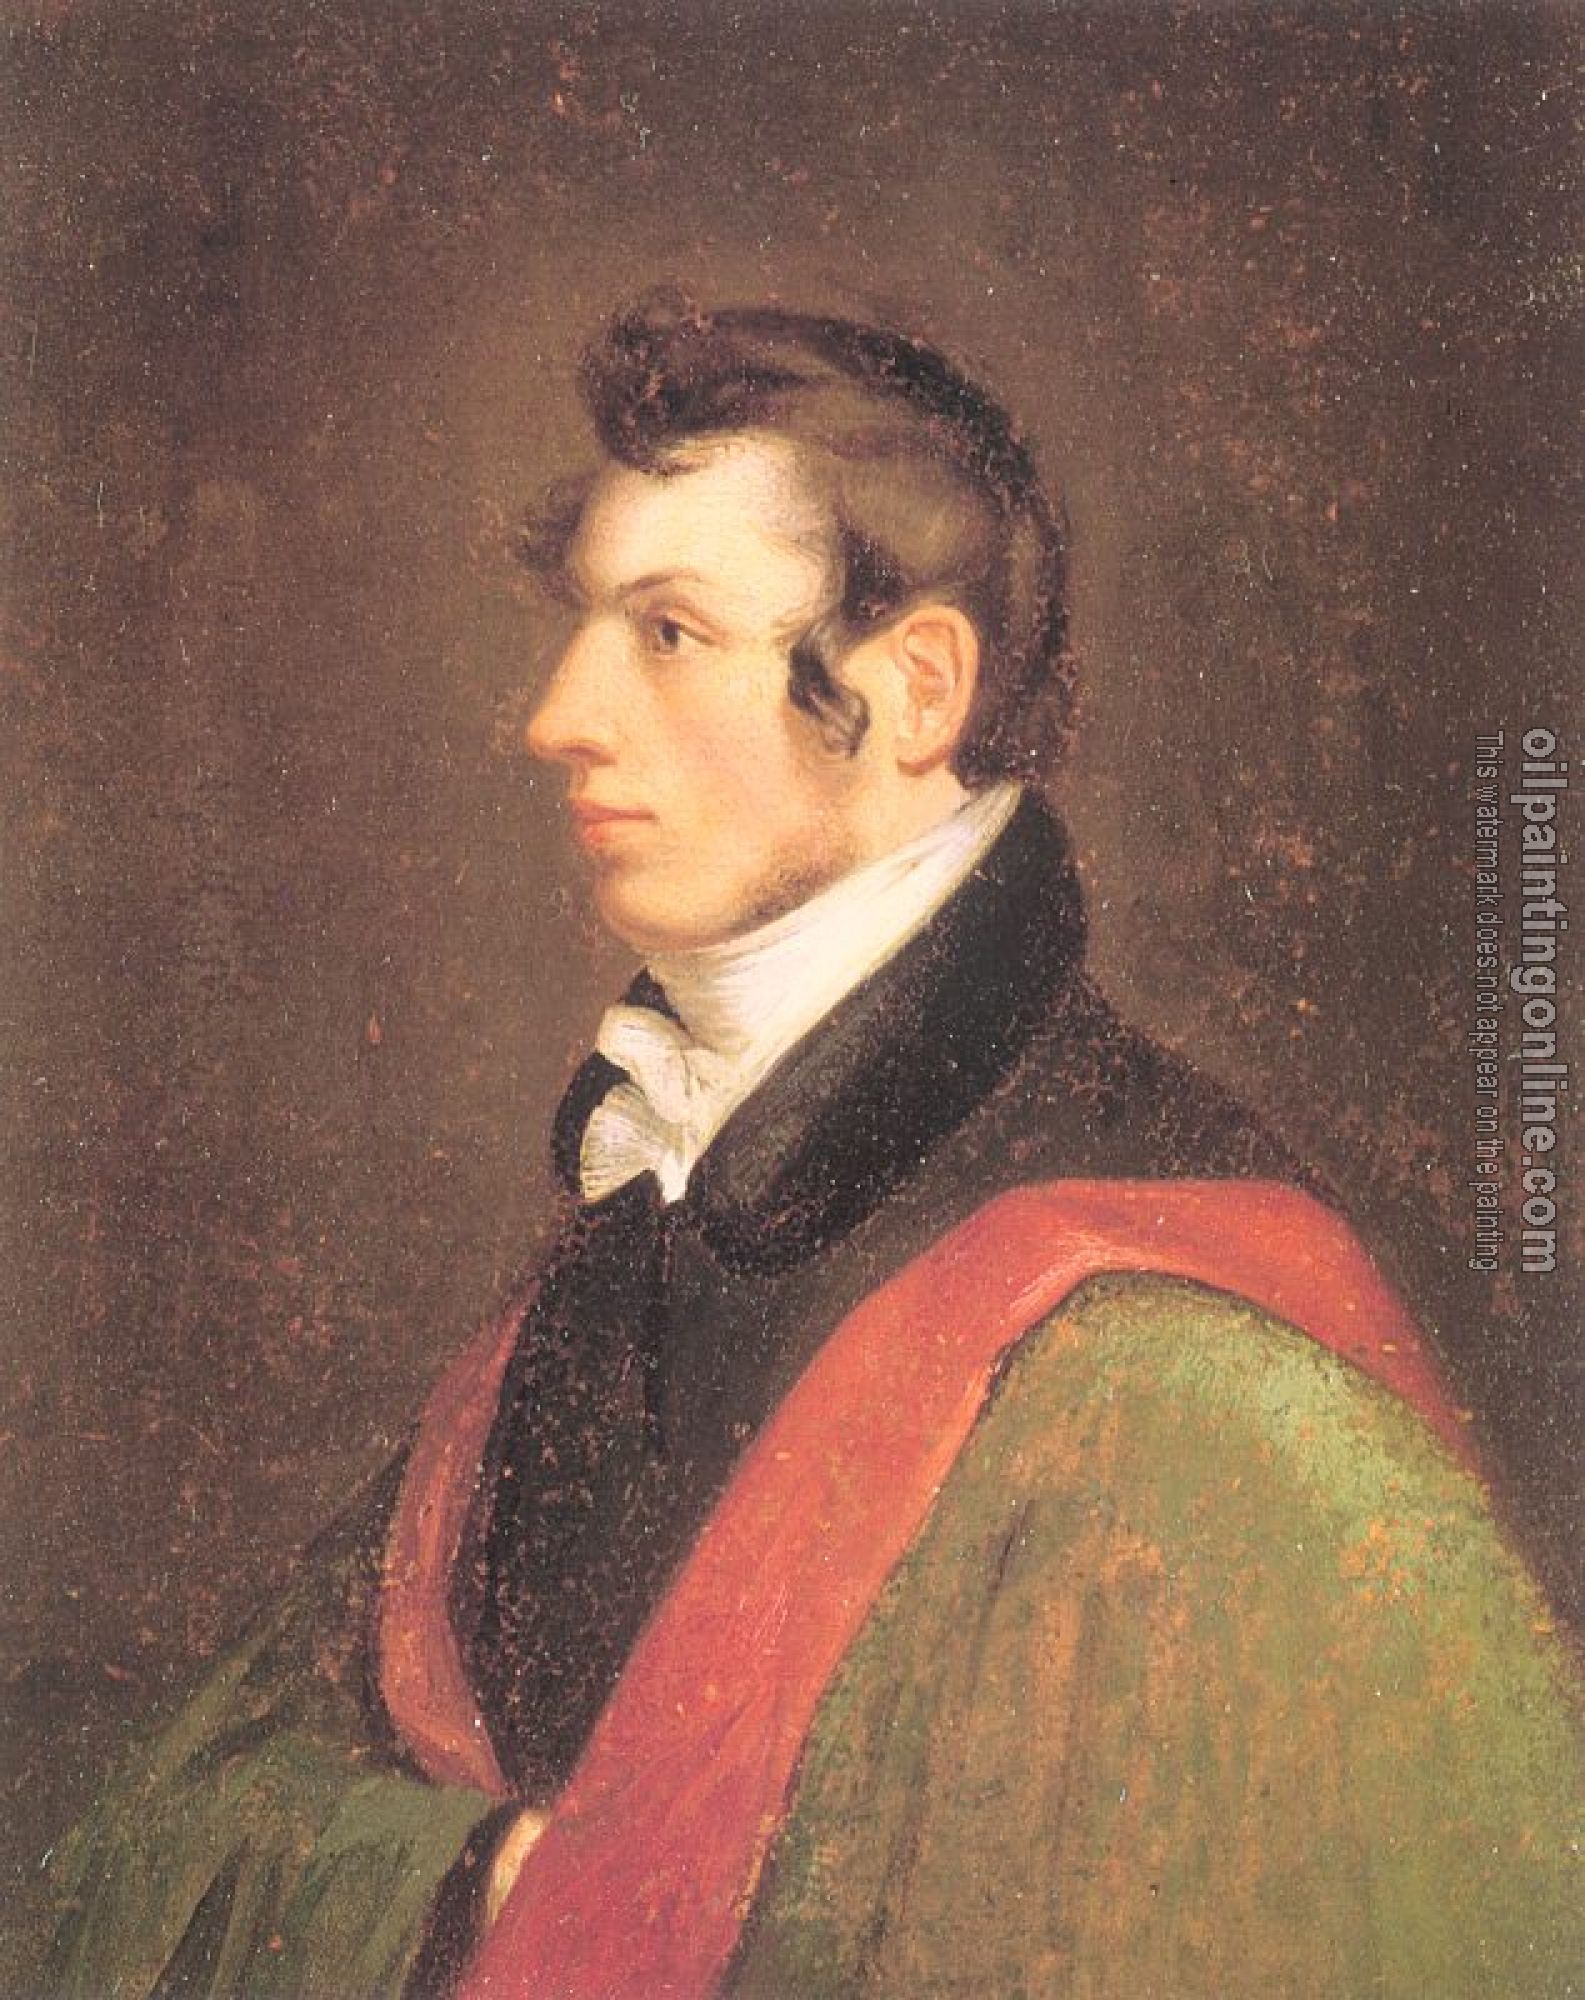 Morse, Samuel Finley Breese - Self-Portrait